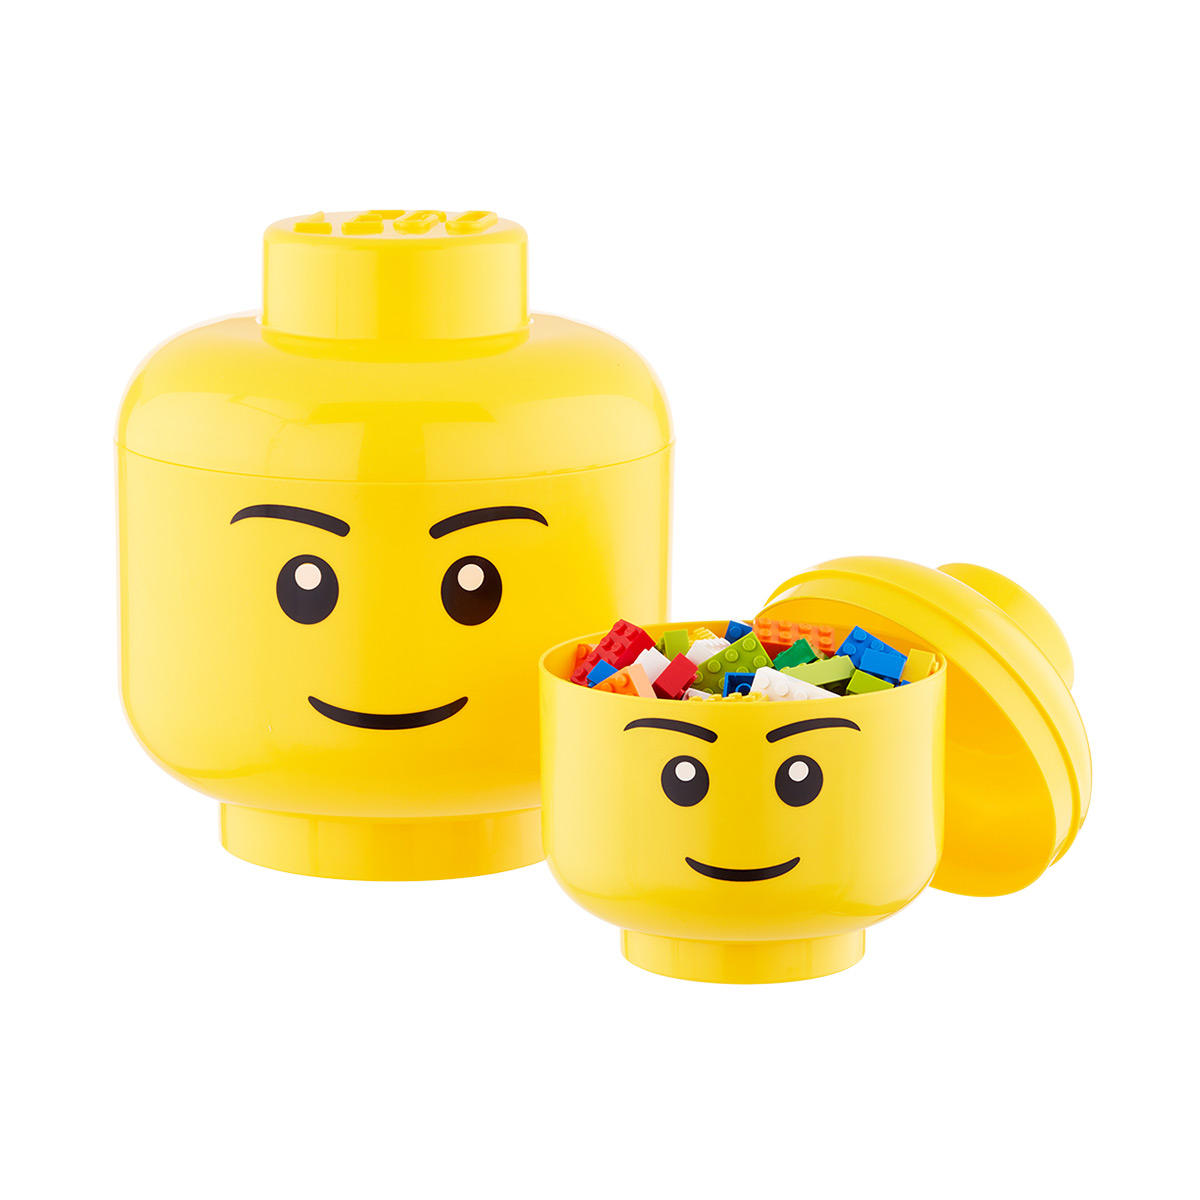 lego brick storage carry case